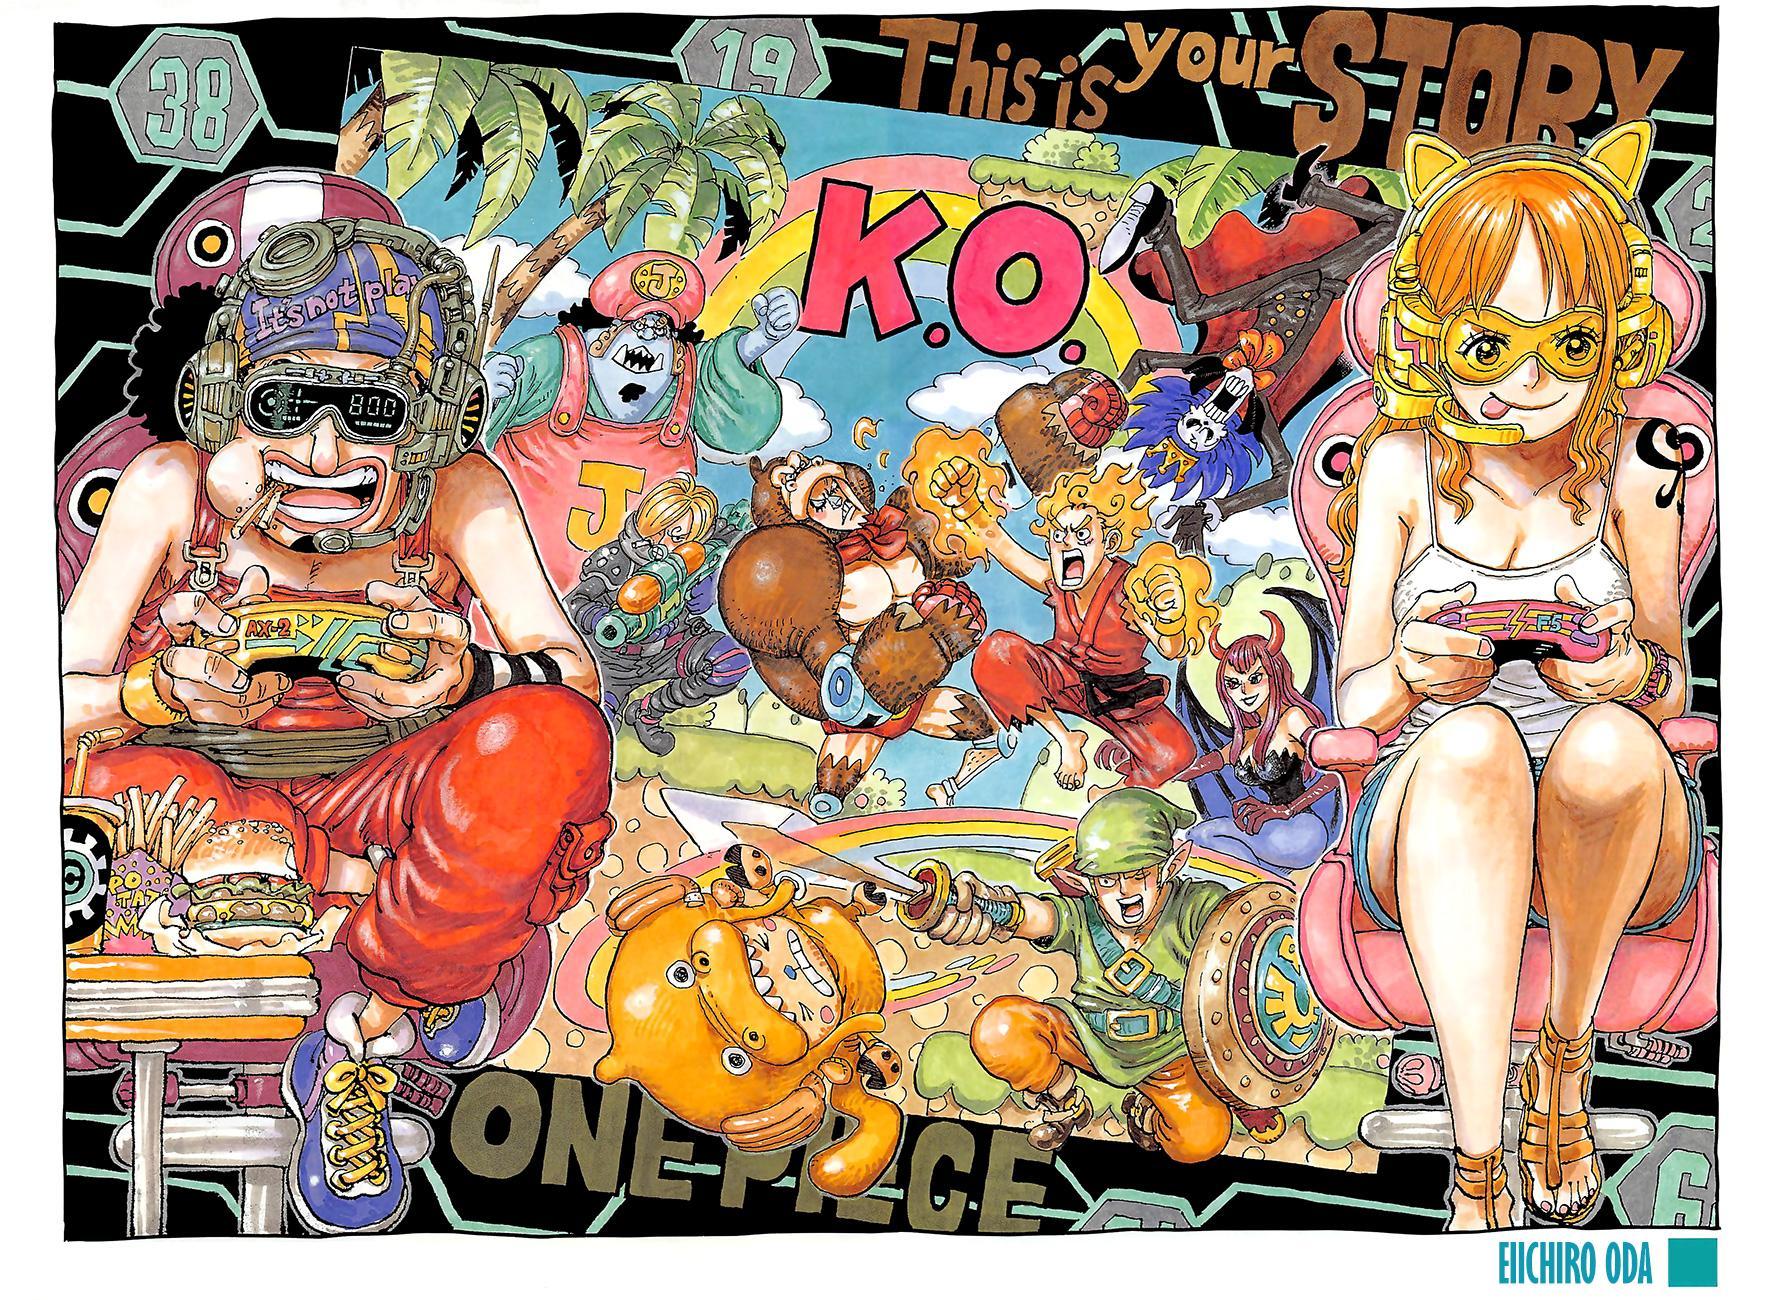 One Piece - Bölüm 1034 Sanji, Queen'e Karşı Oku